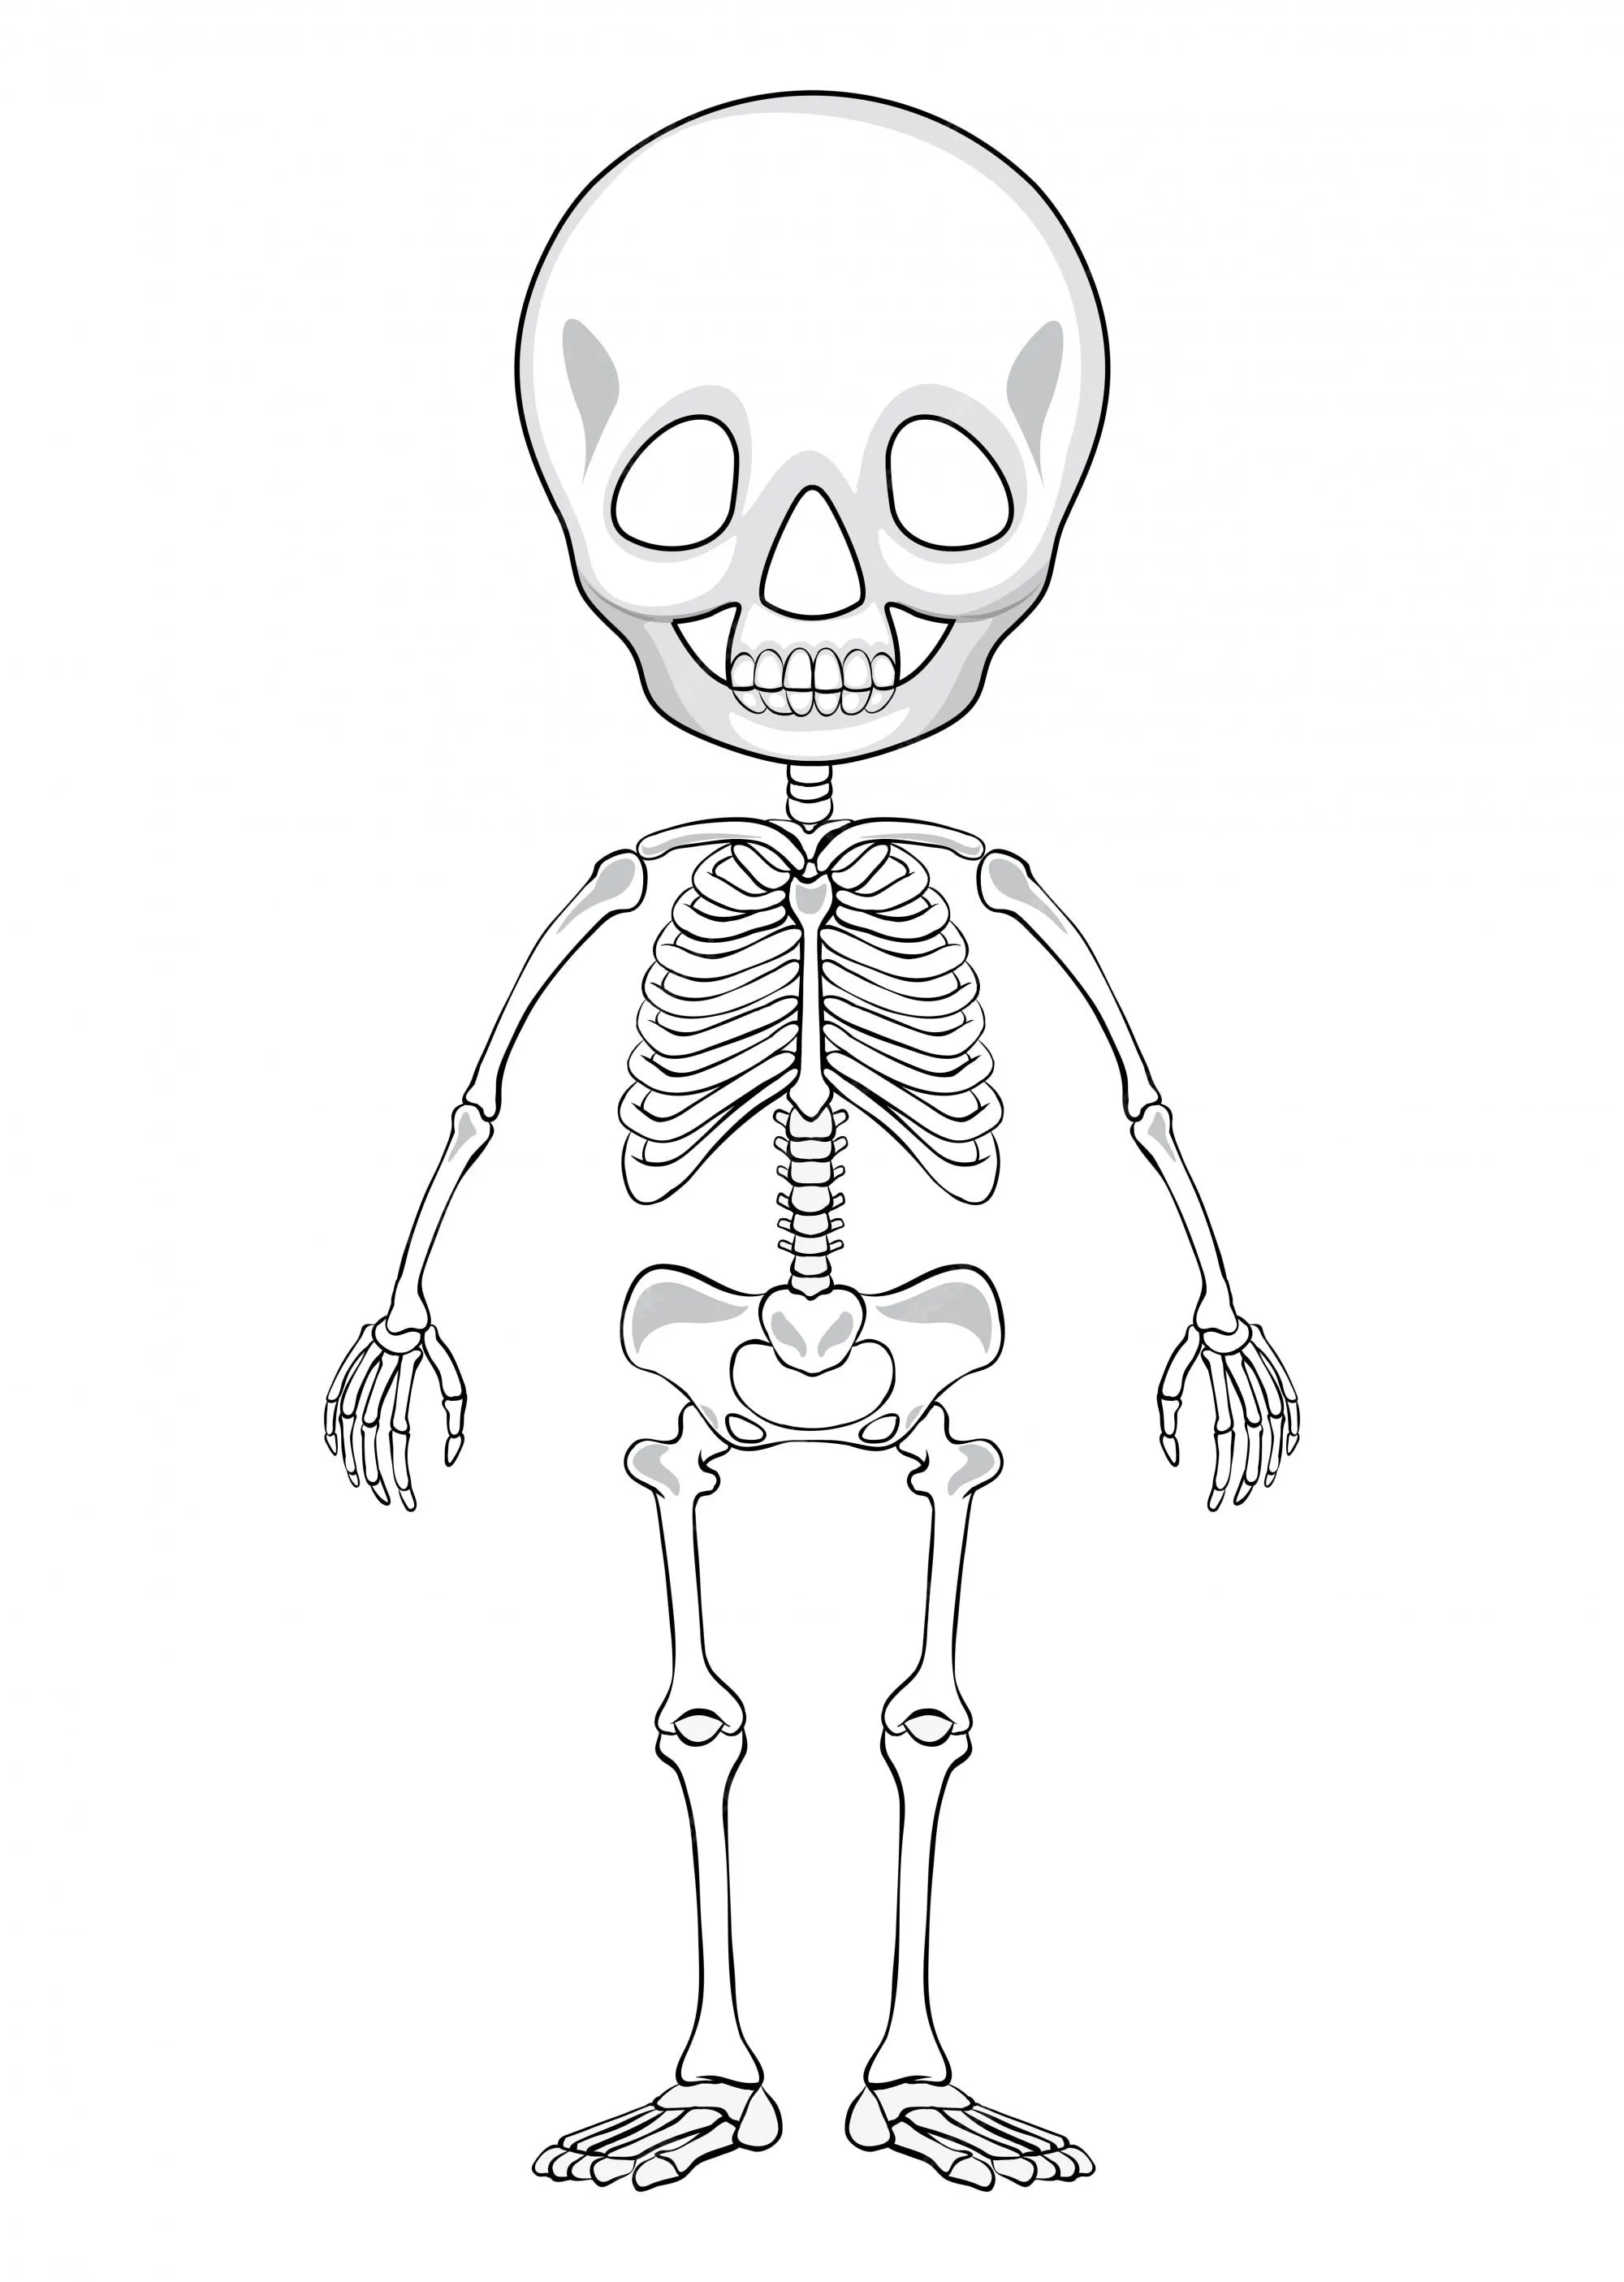 Dibujo esquemático de un esqueleto humano | Vector Gratis